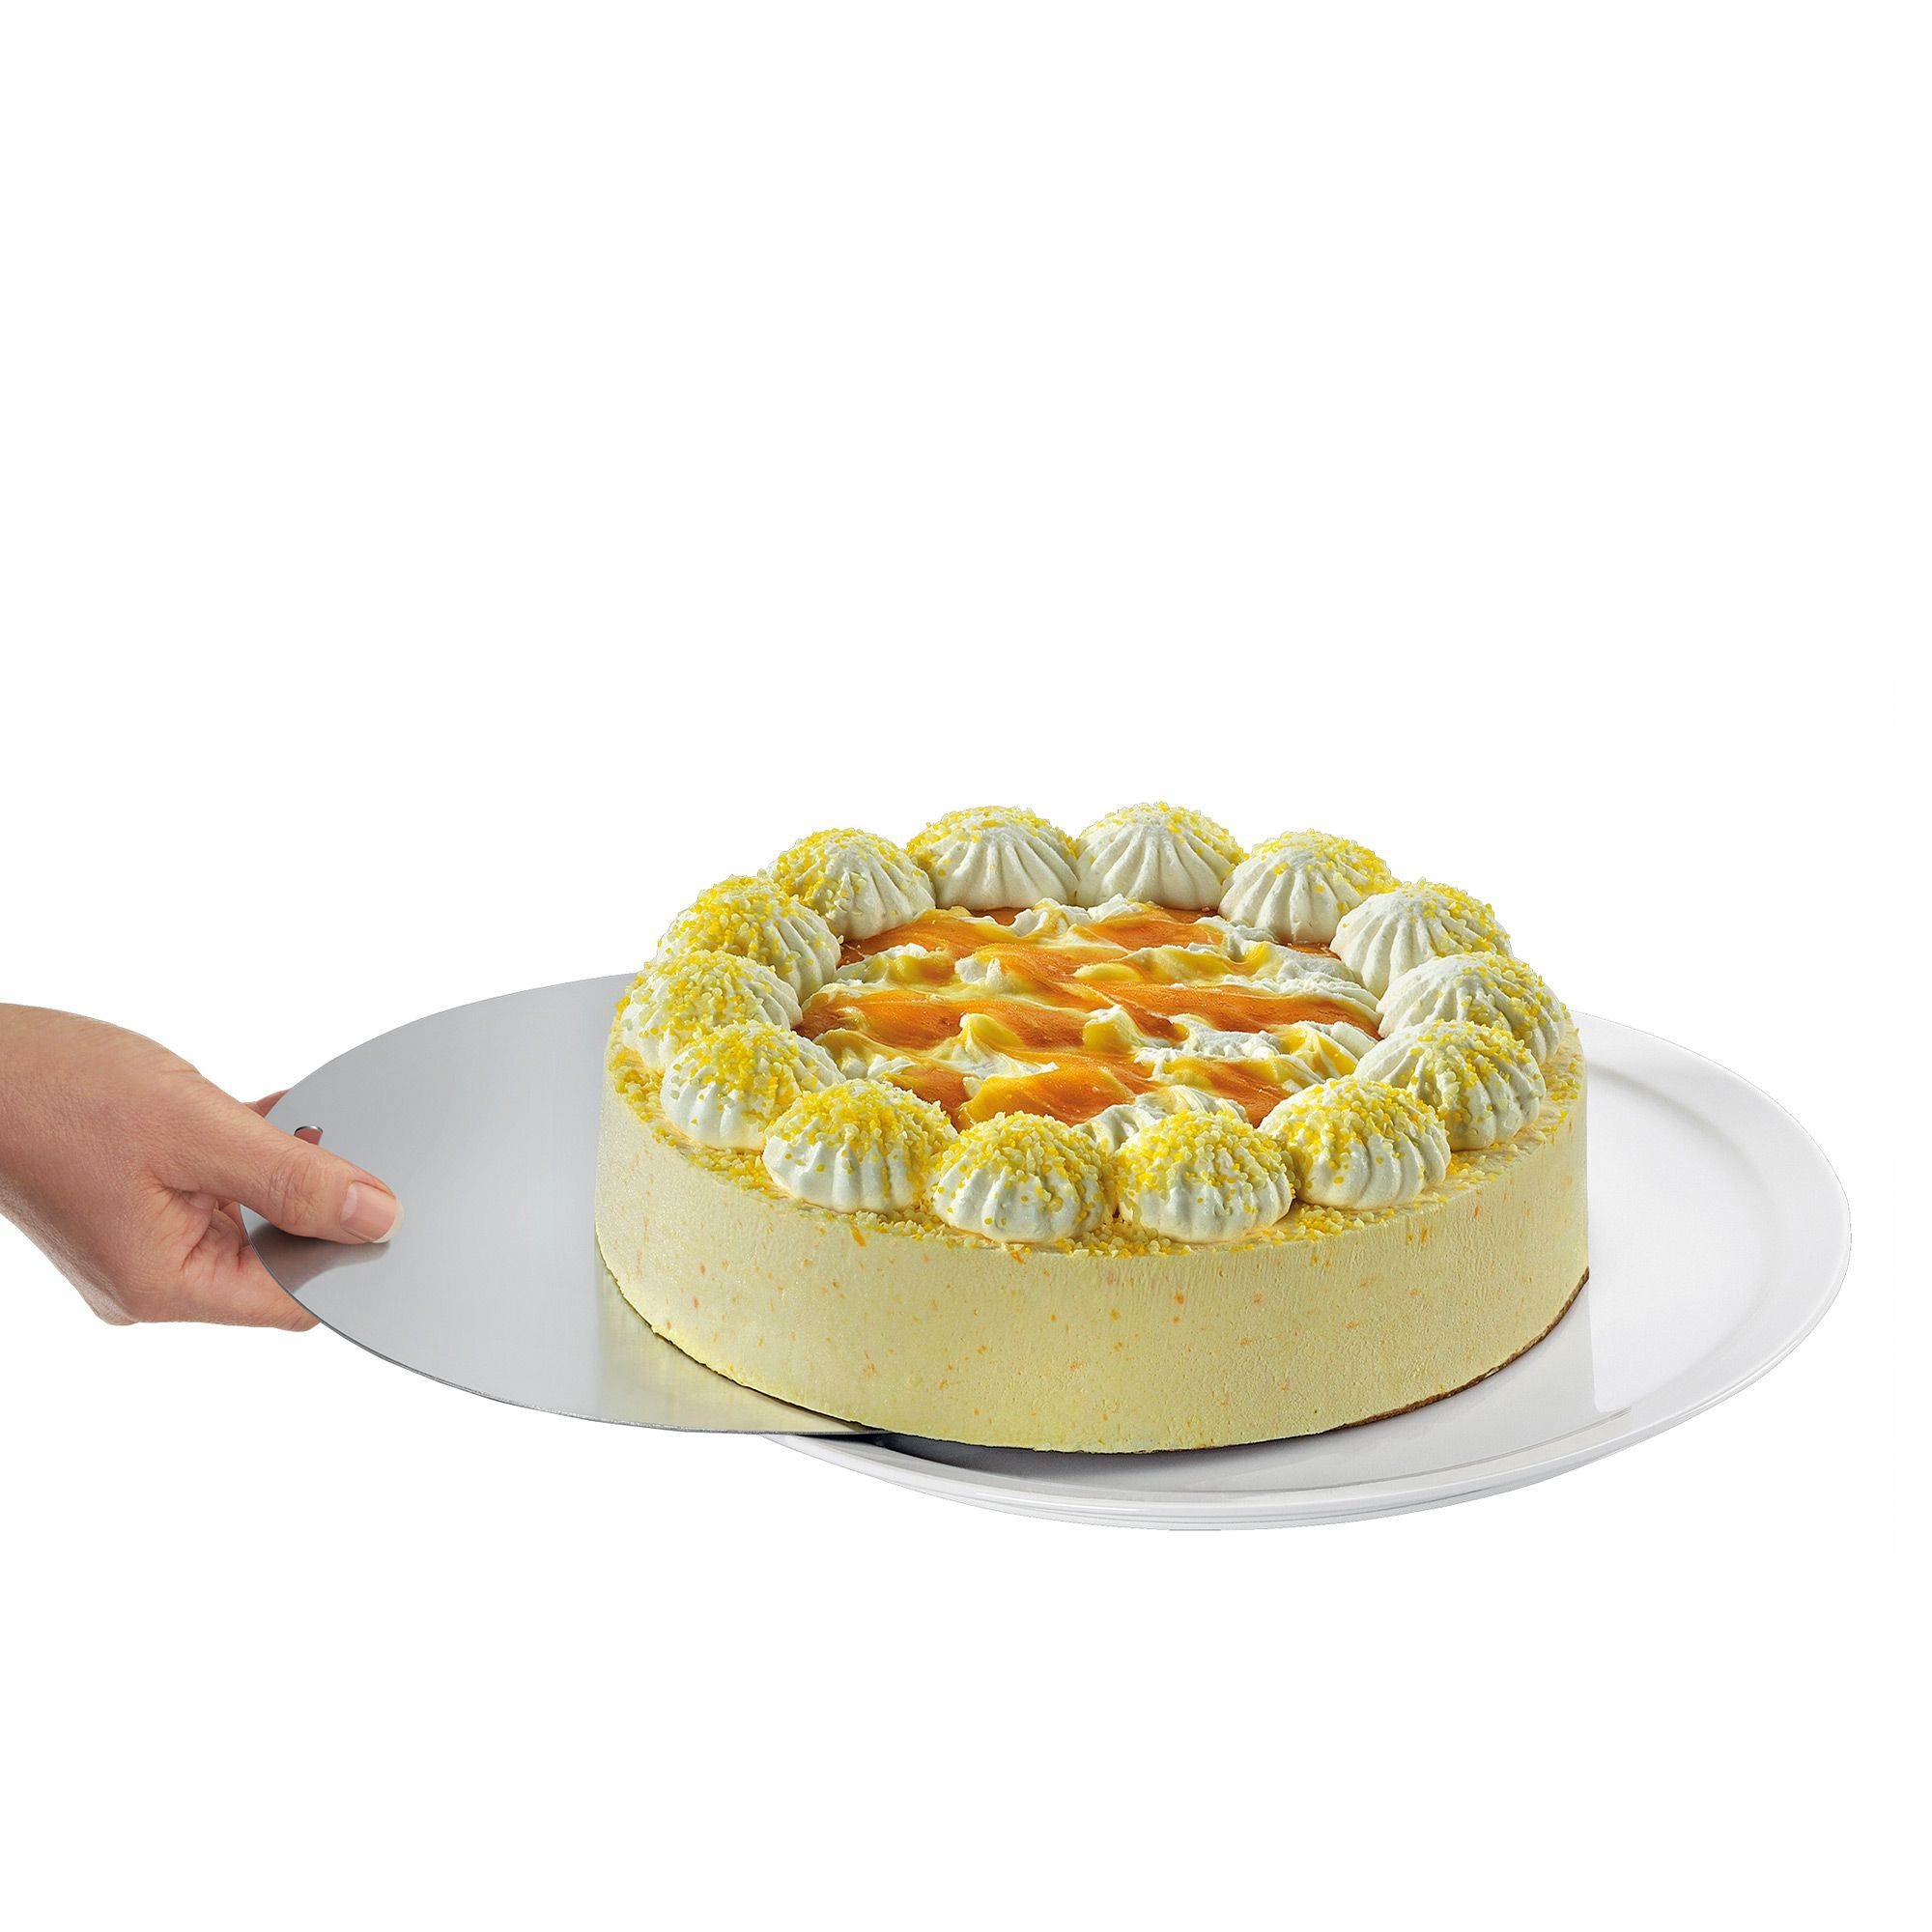 Küchenprofi - Cake server - BAKE